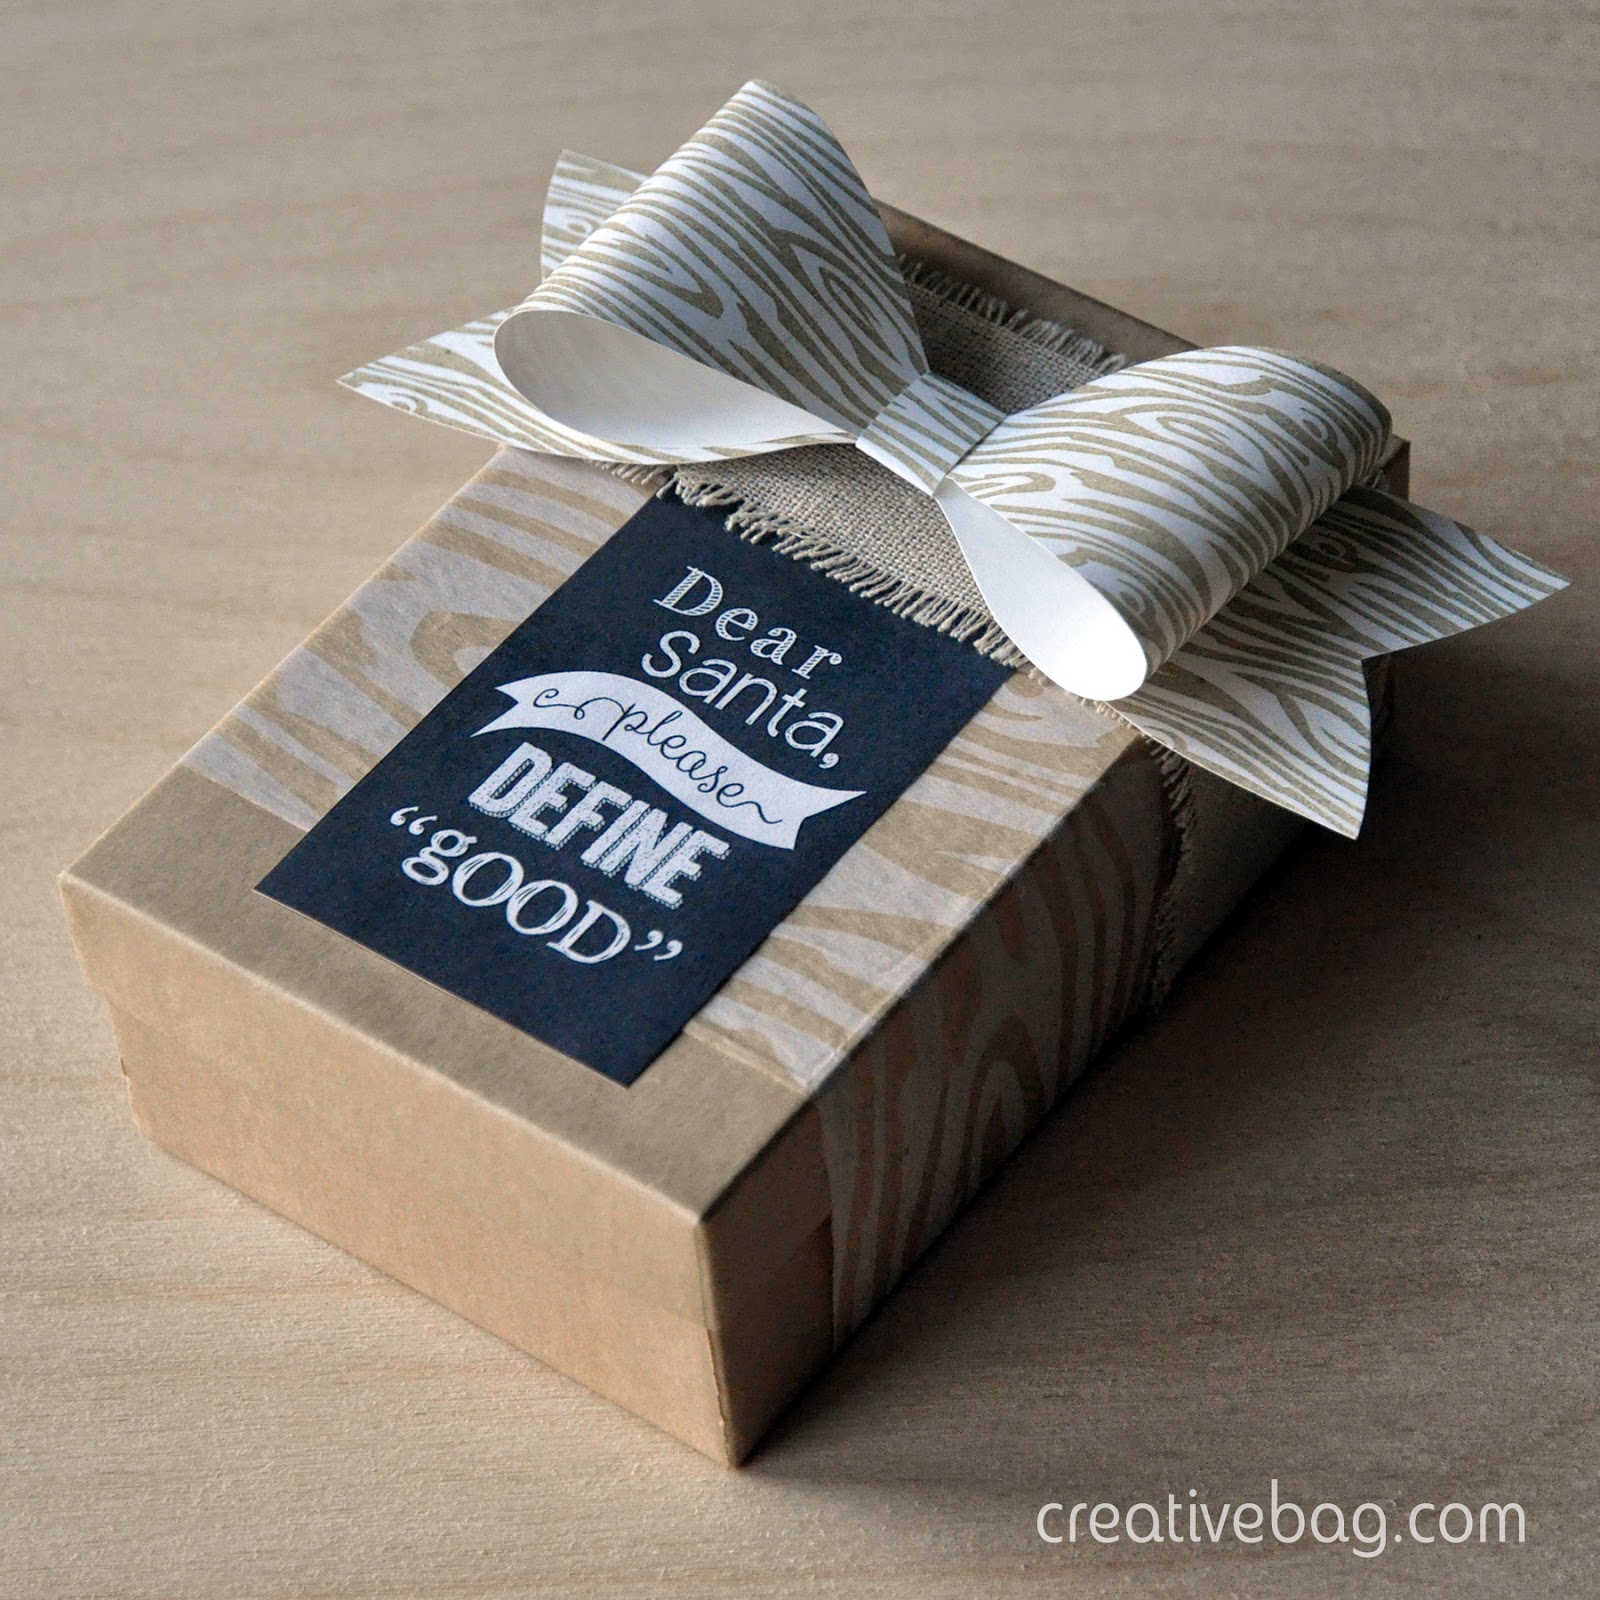 paper bow printables to download for free - woodland theme | creativebag.com